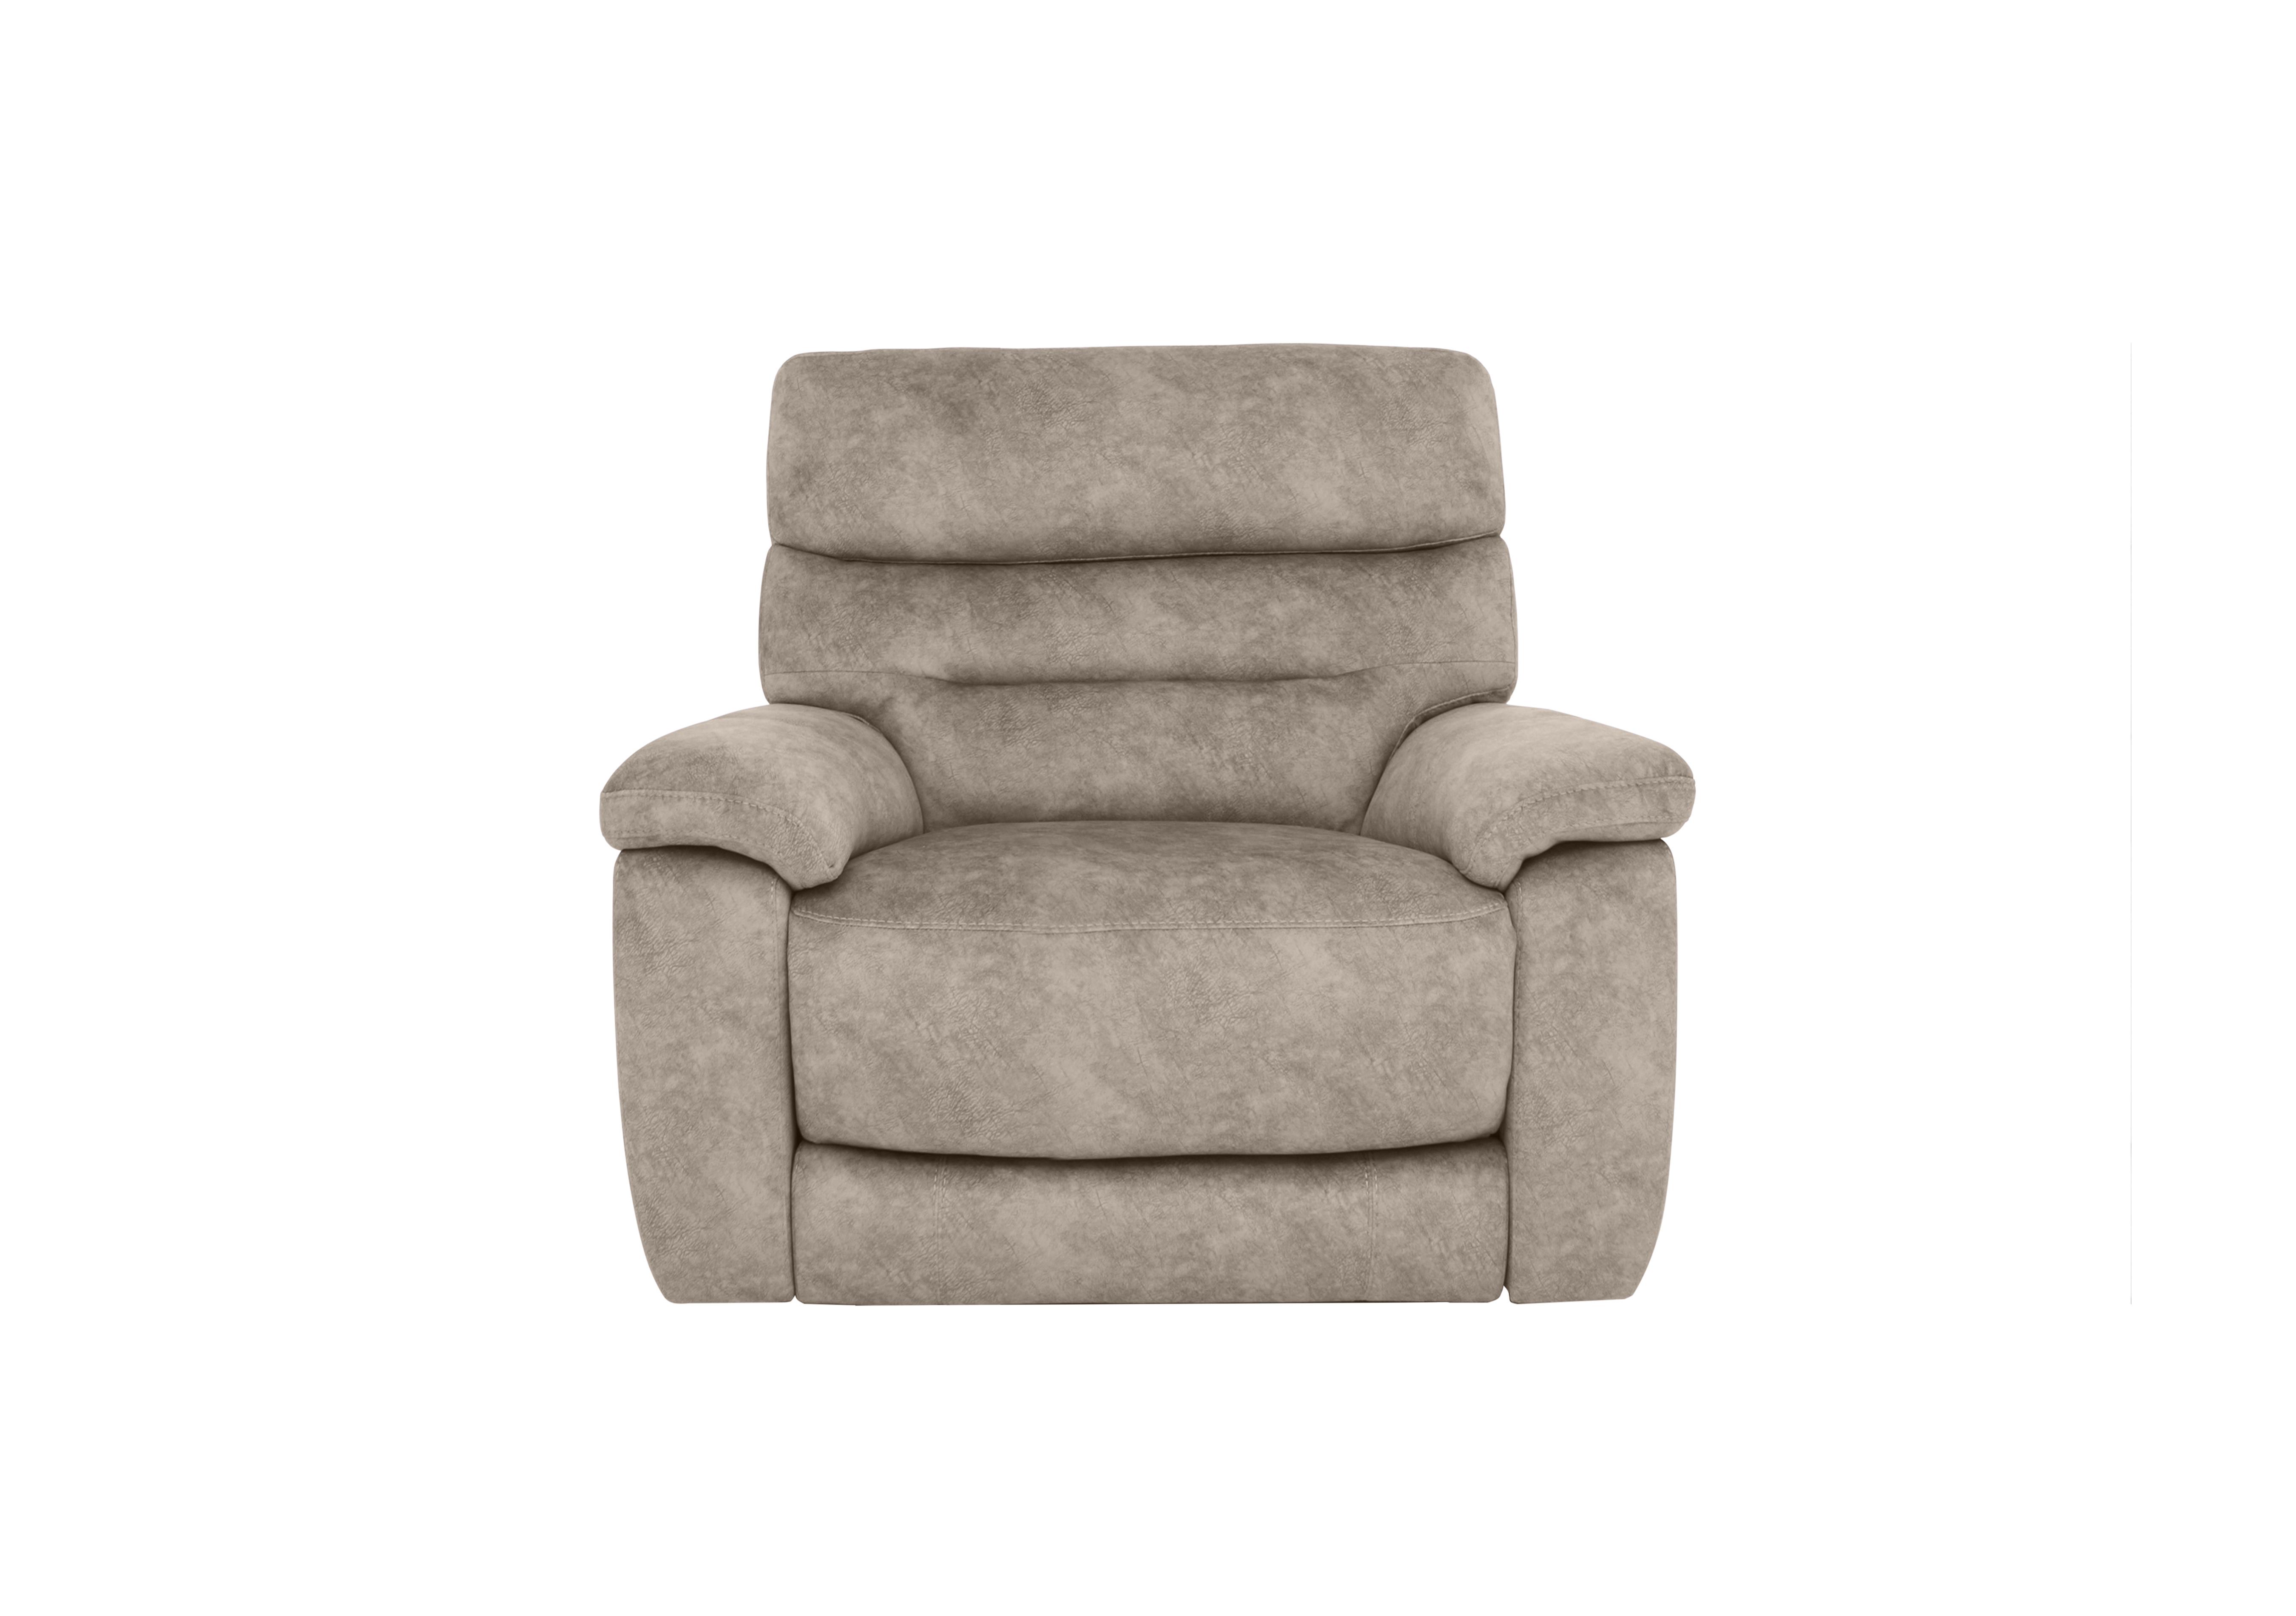 Nimbus Fabric Power Recliner Chair with Power Headrest in Bfa-Bnn-R29 Mink on Furniture Village